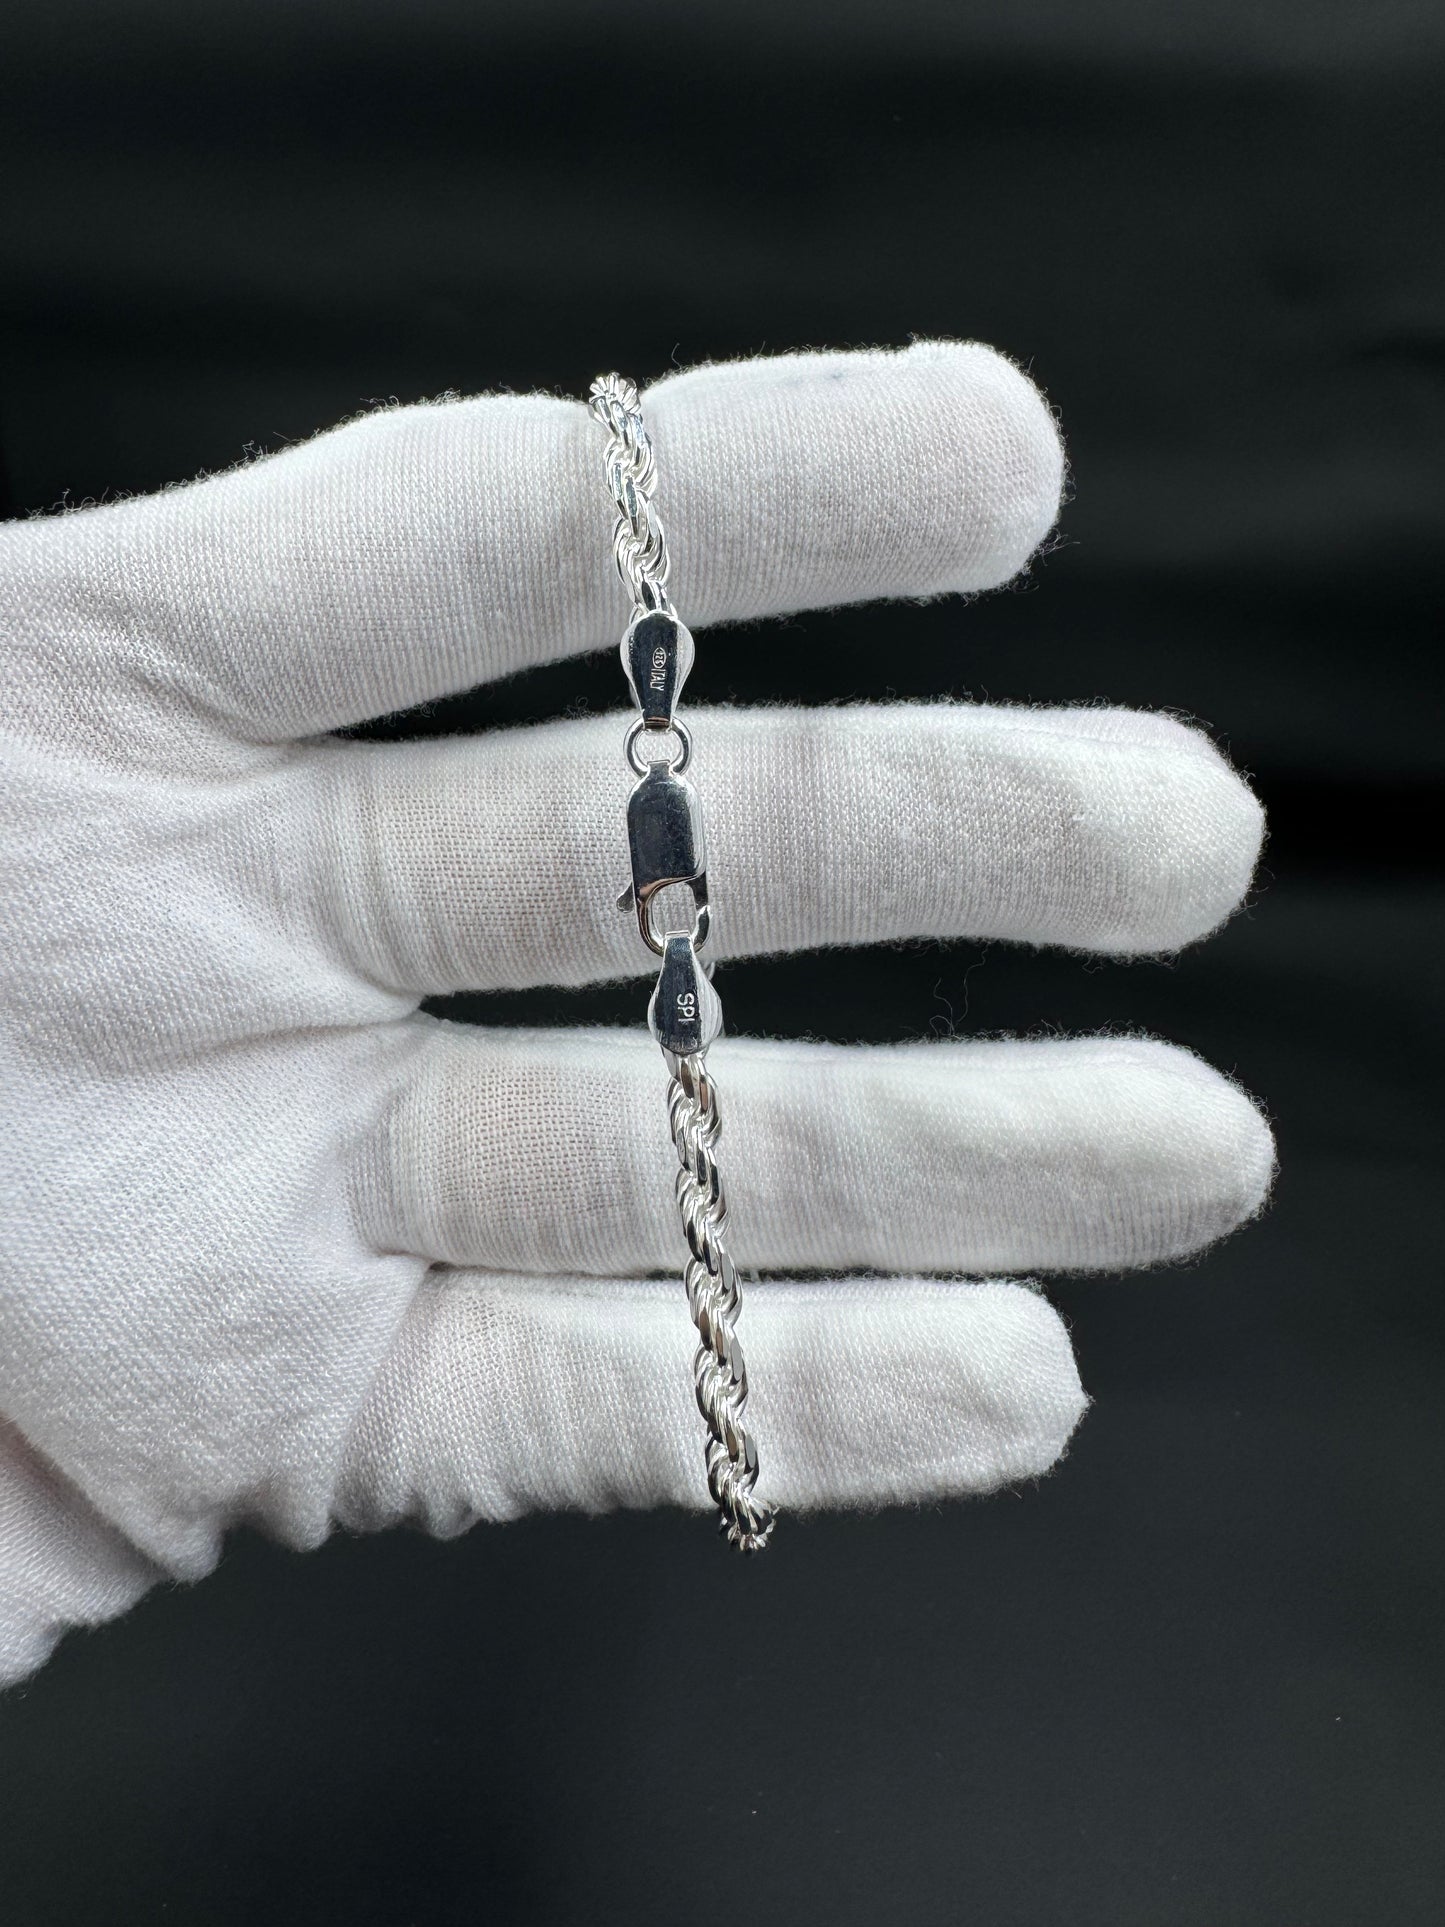 3.7mm Sterling Silver Rope Bracelet 8"